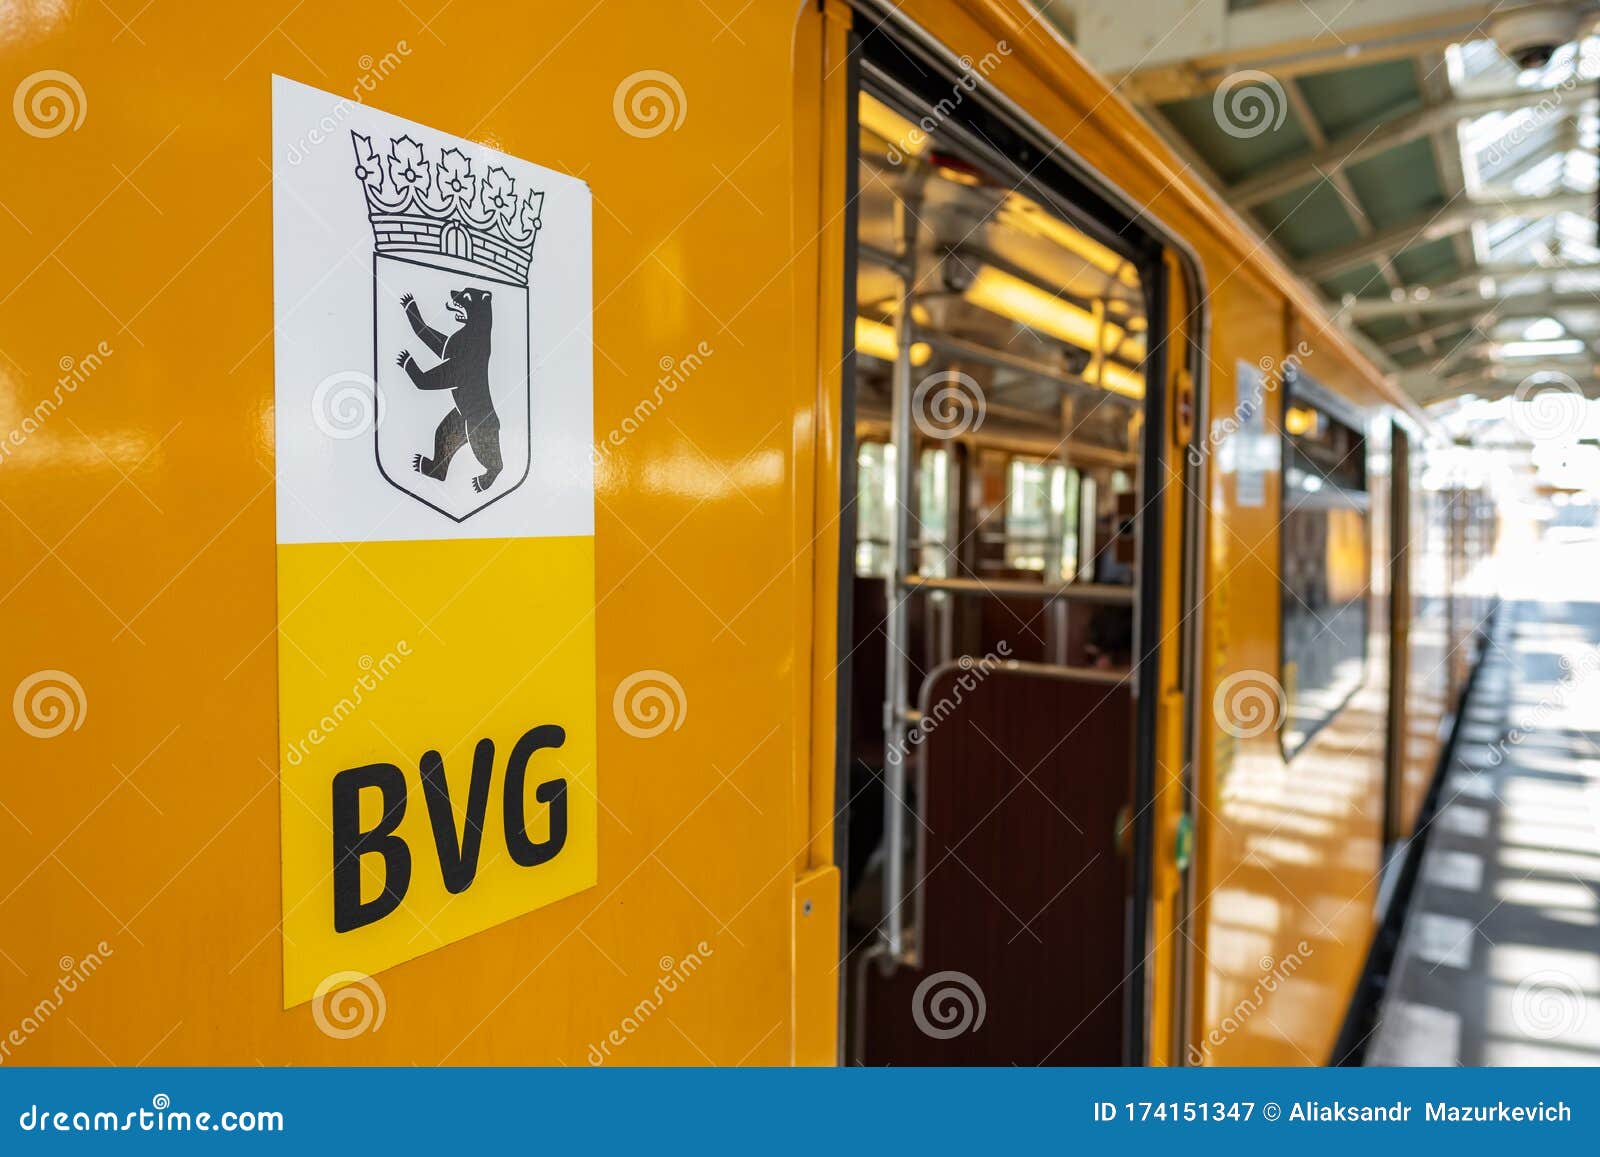 BVG Berlin Transport Company Logo Closeup On The Yellow